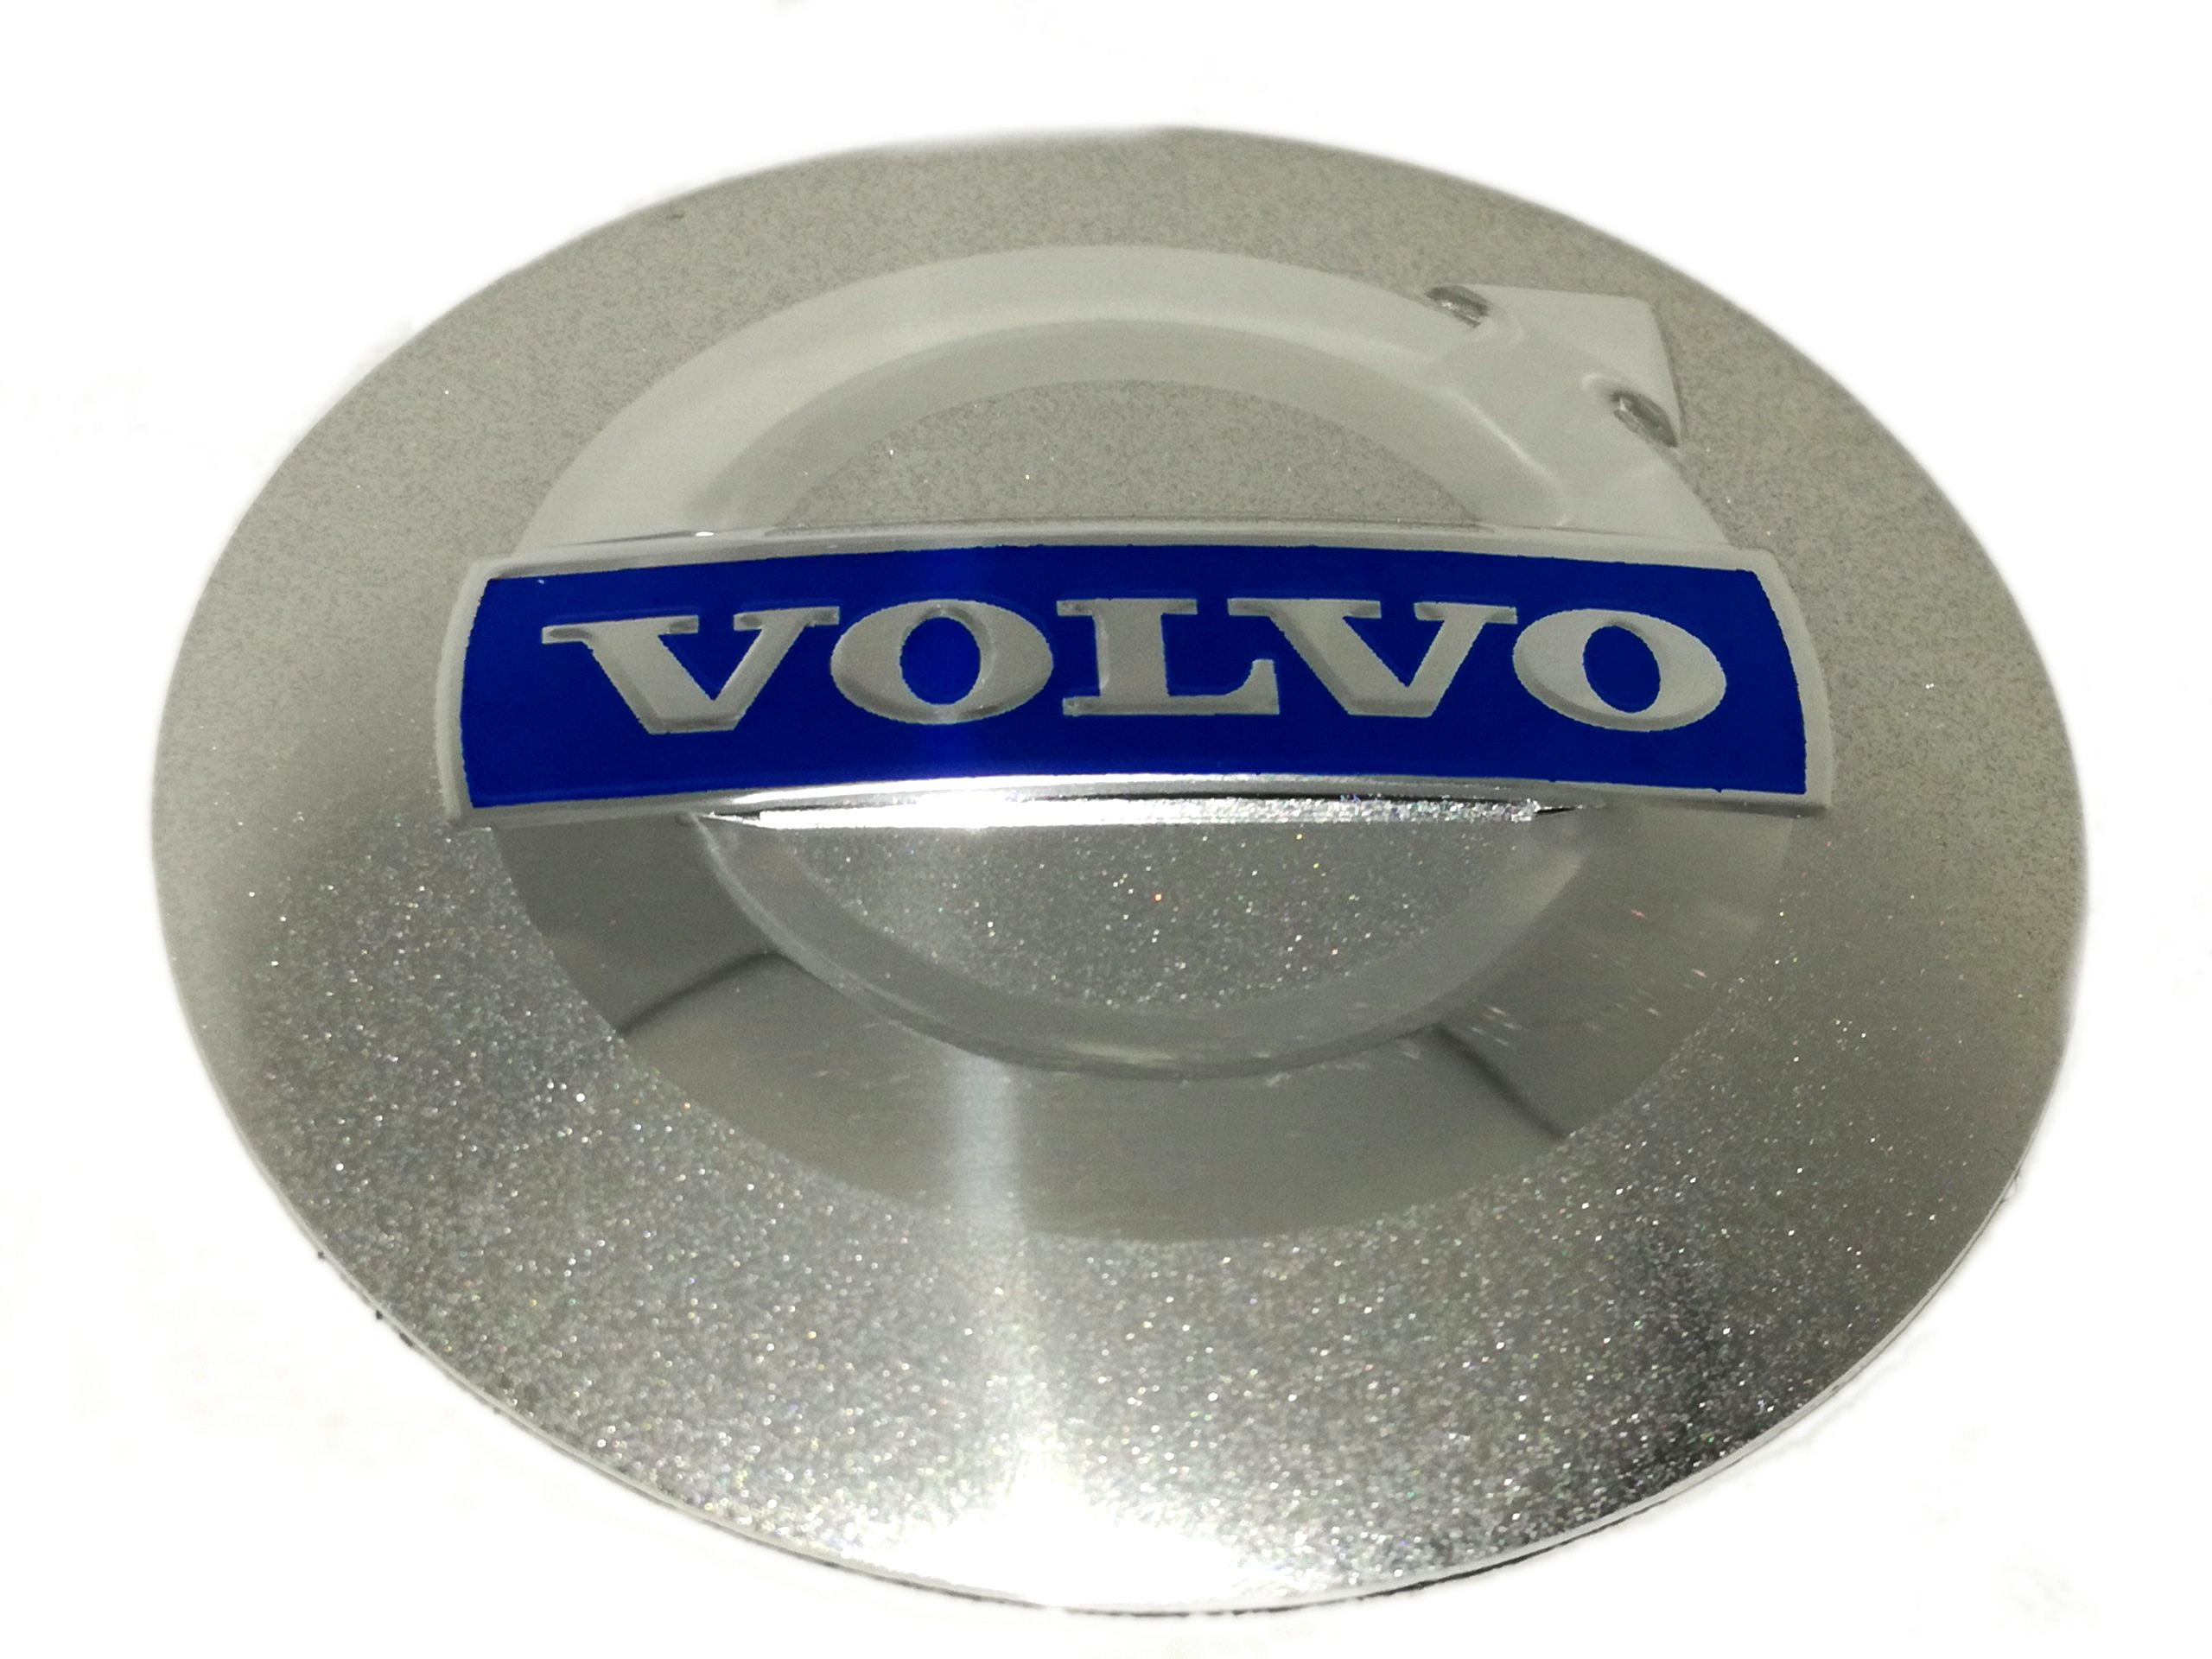 Логотип колпачка на диск. Колпак Volvo 56. Колпак на ступицу Volvo FH. "Колпак" Volvo арт. 30683237. Колпак колеса Вольво.